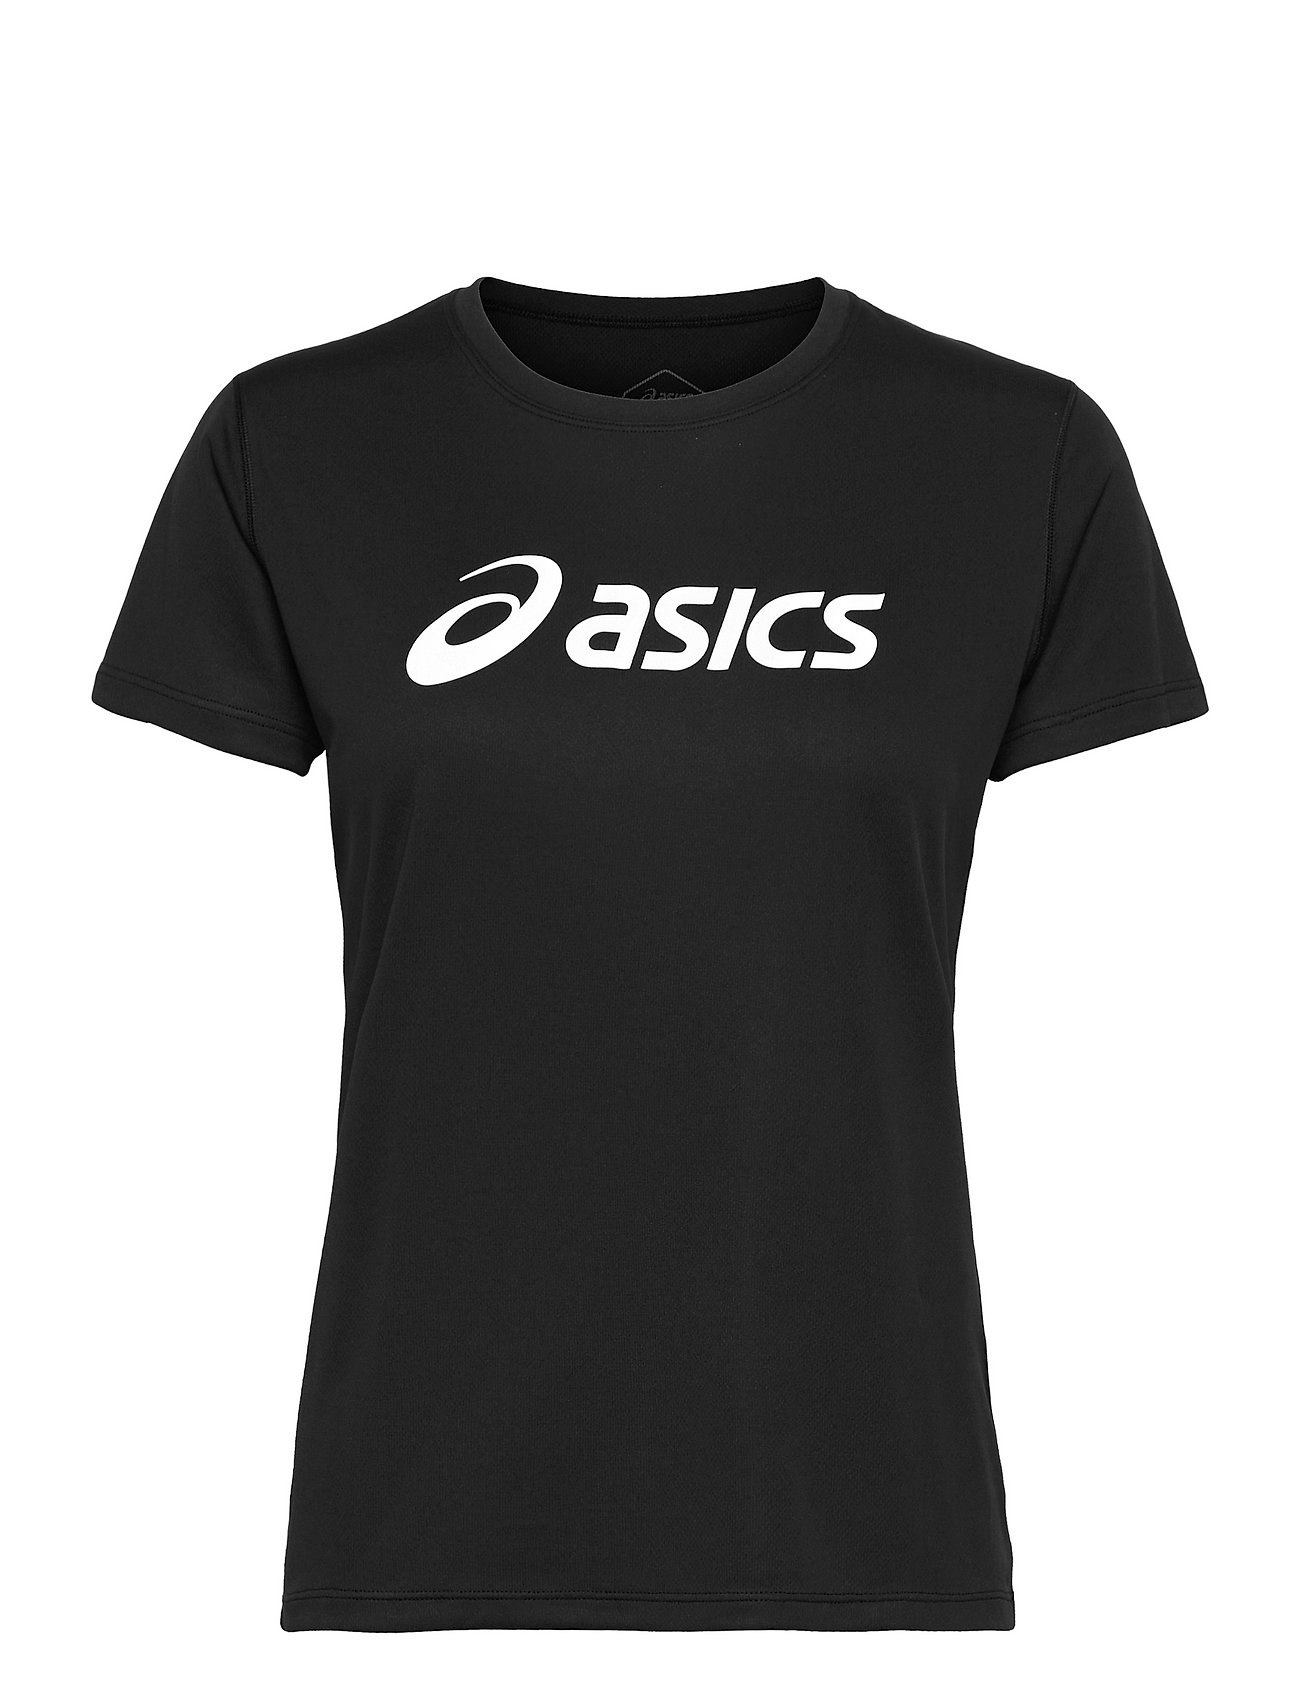 Core Asics Top T-shirts & Tops Short-sleeved Musta Asics